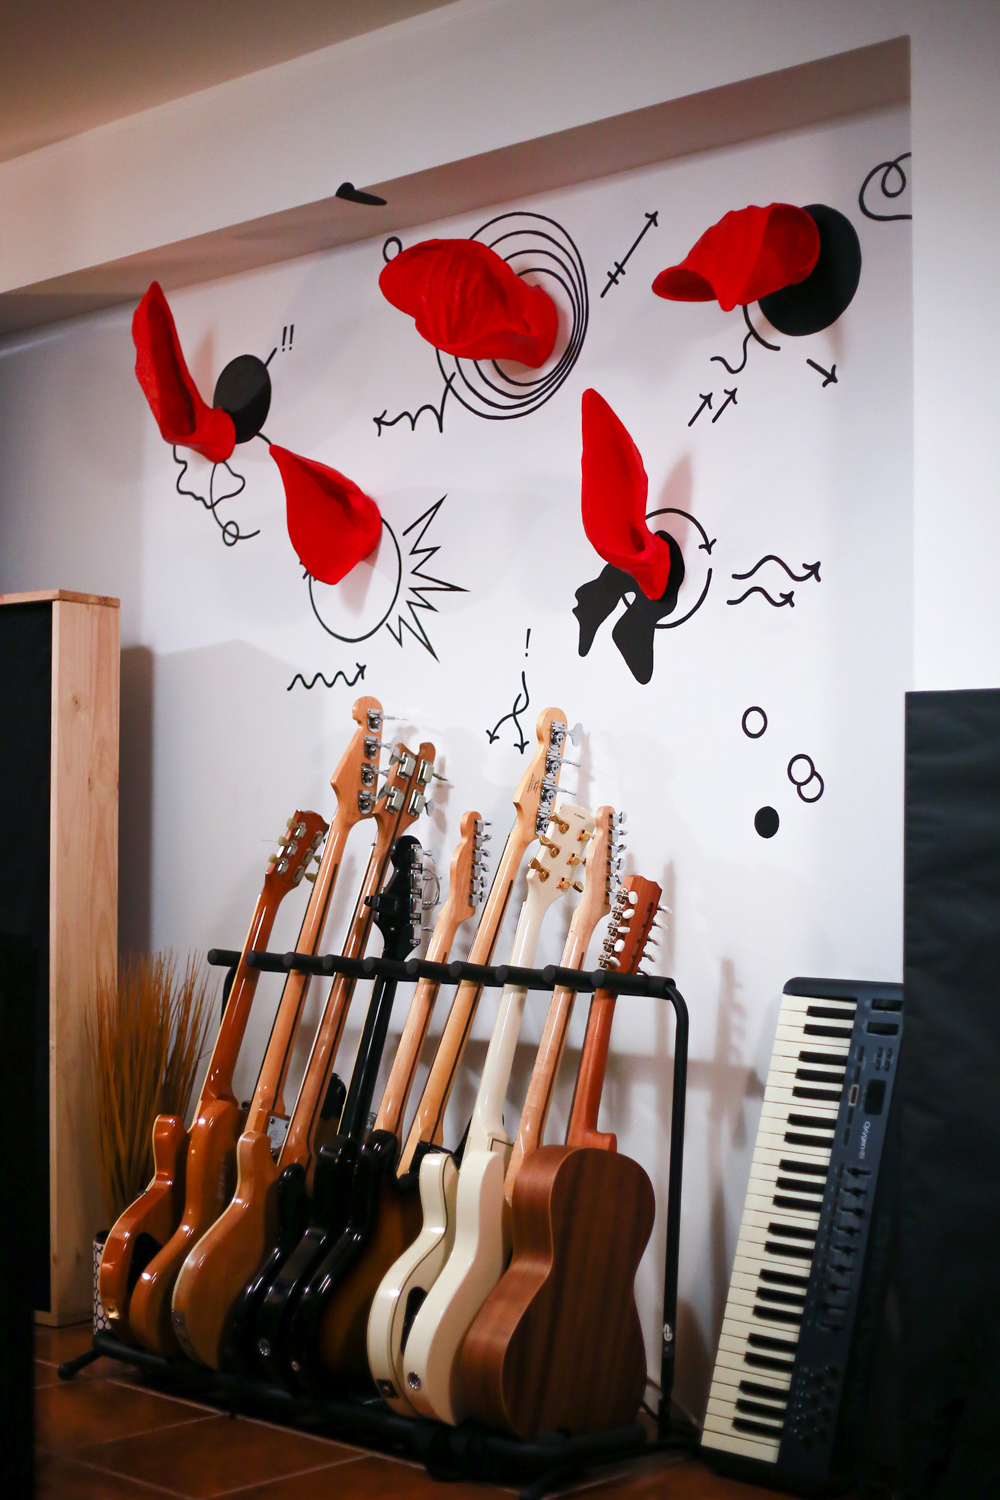 BACO recording studio ears mural by Eugenia Wasylczenko